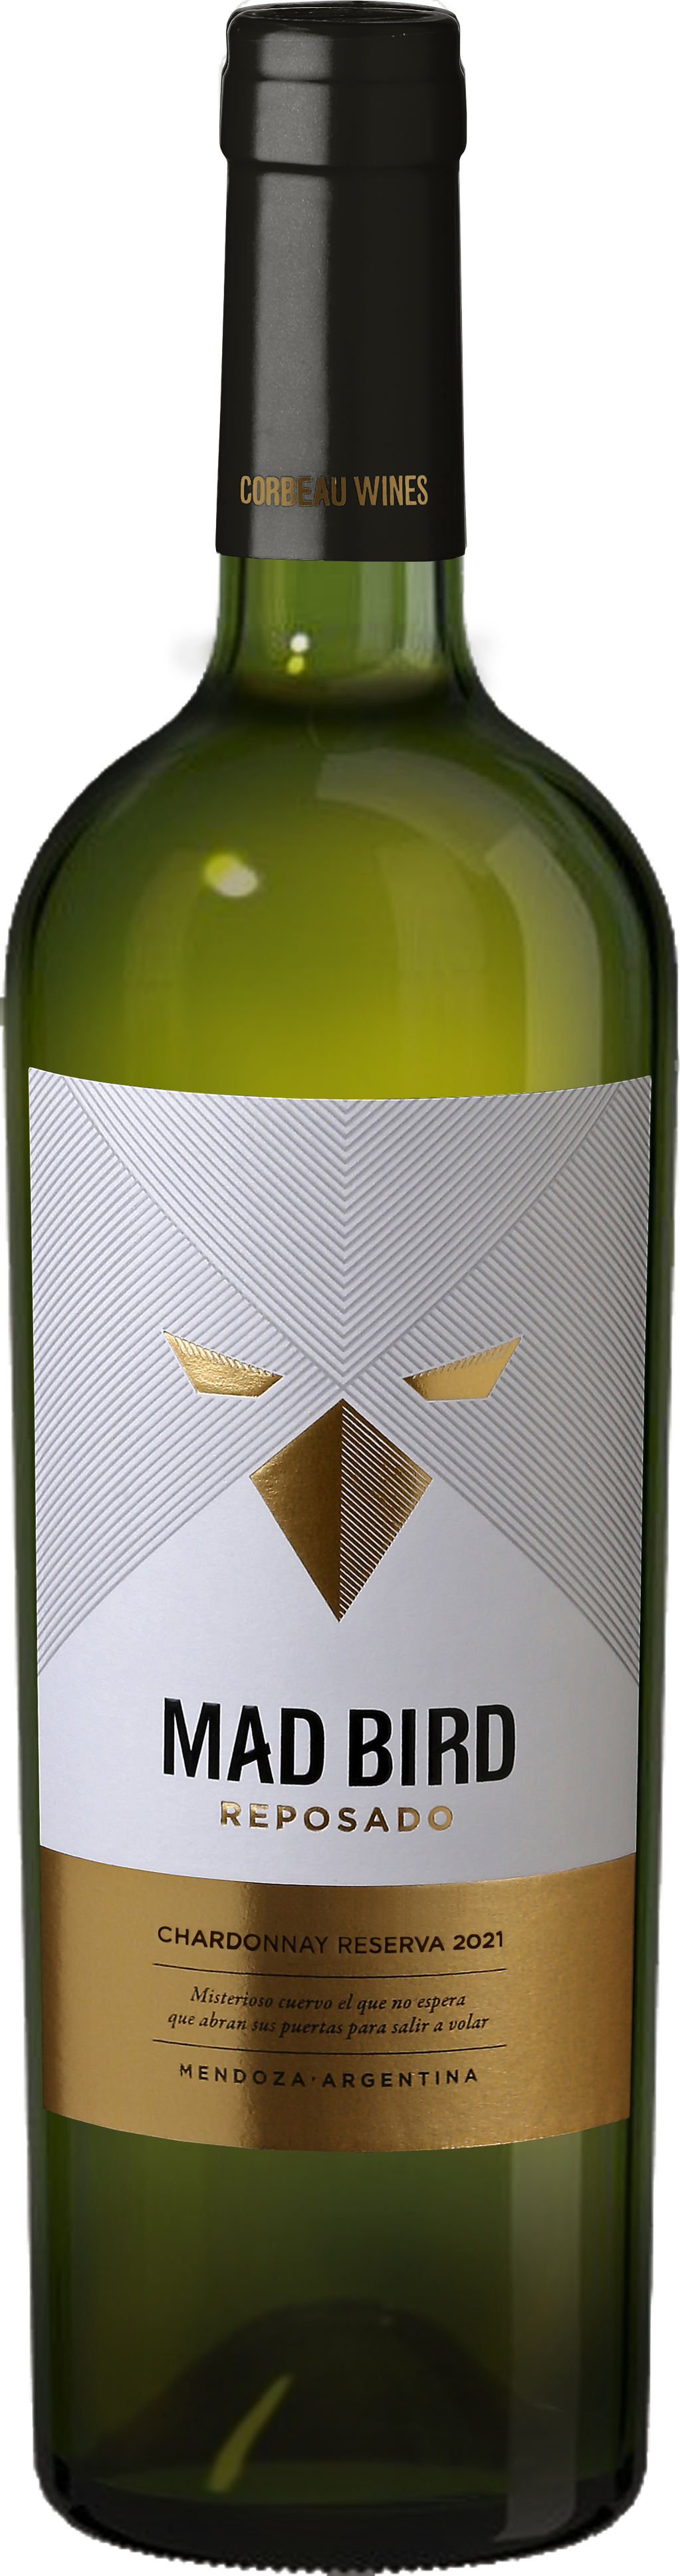 Madbird, Reposado Chardonnay 2021 de Corbeau Wines.